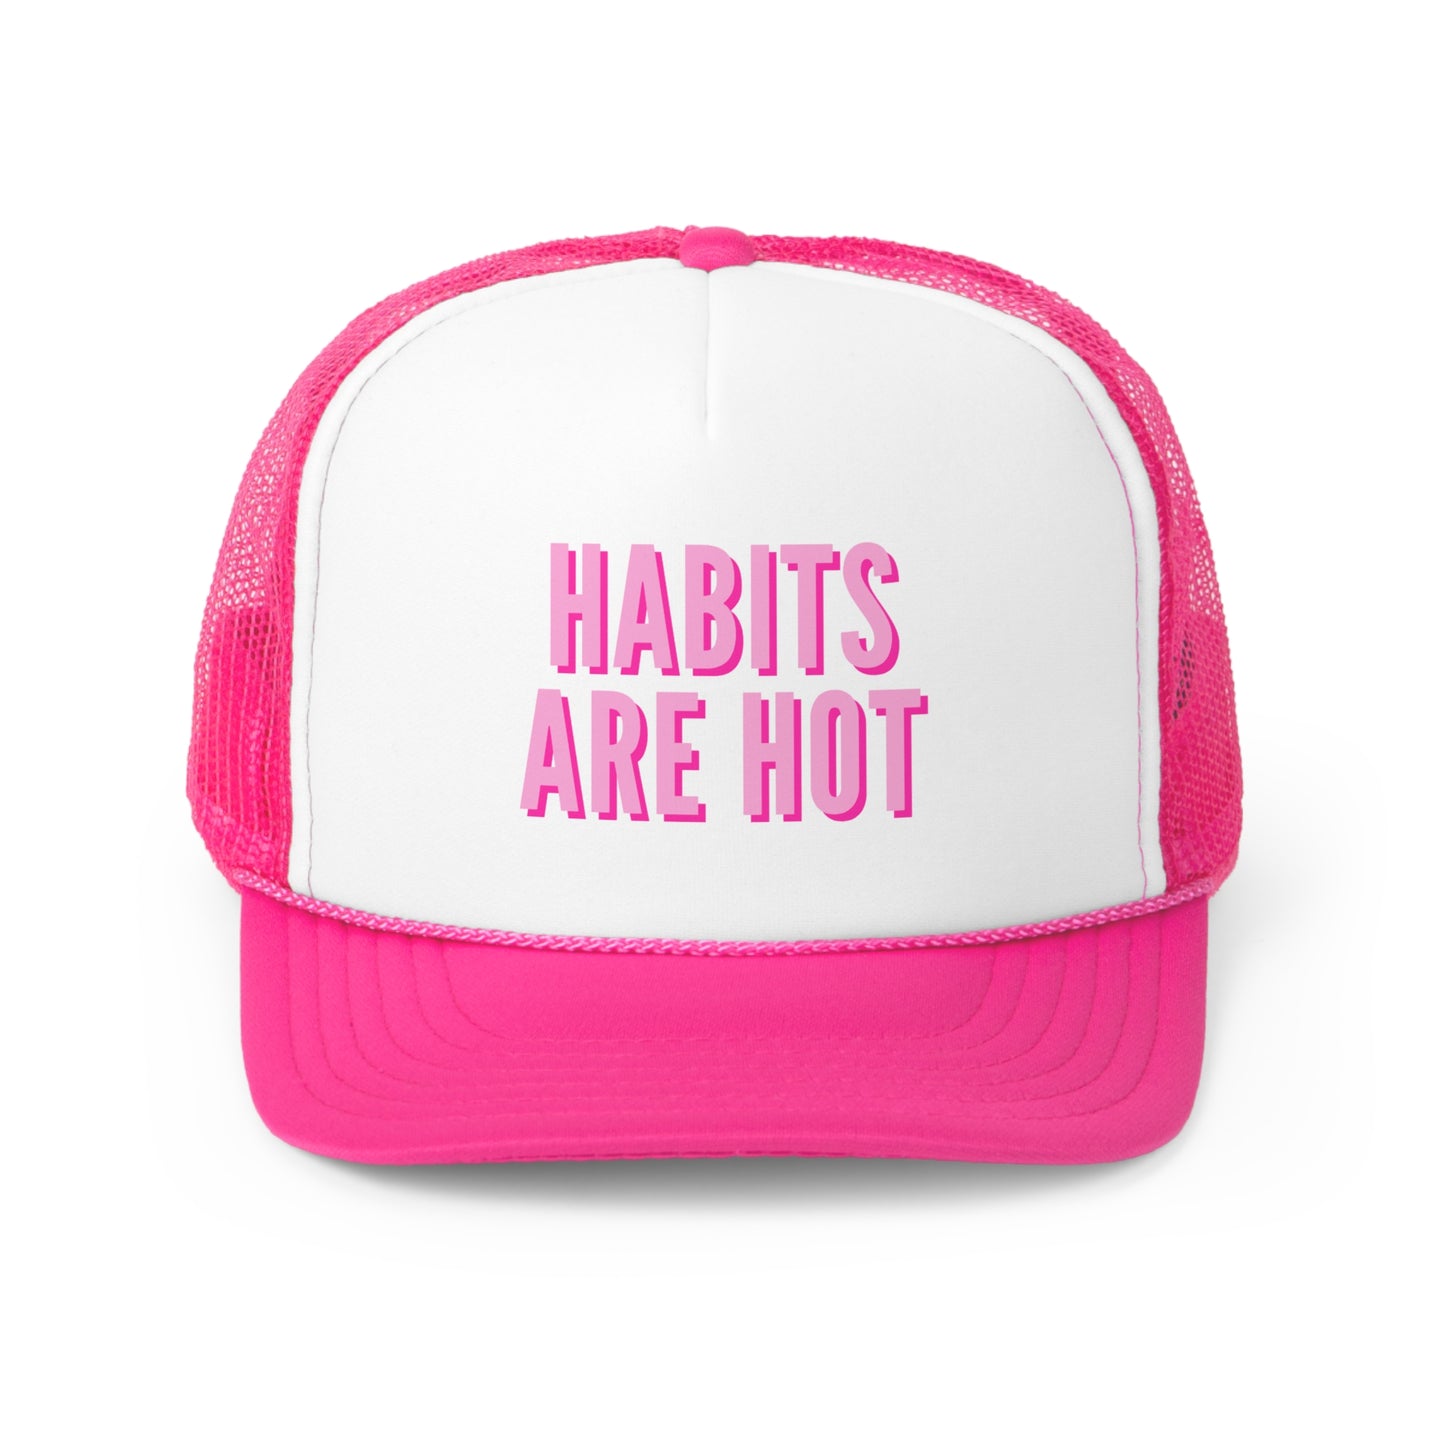 Habits Are Hot Trucker Hat